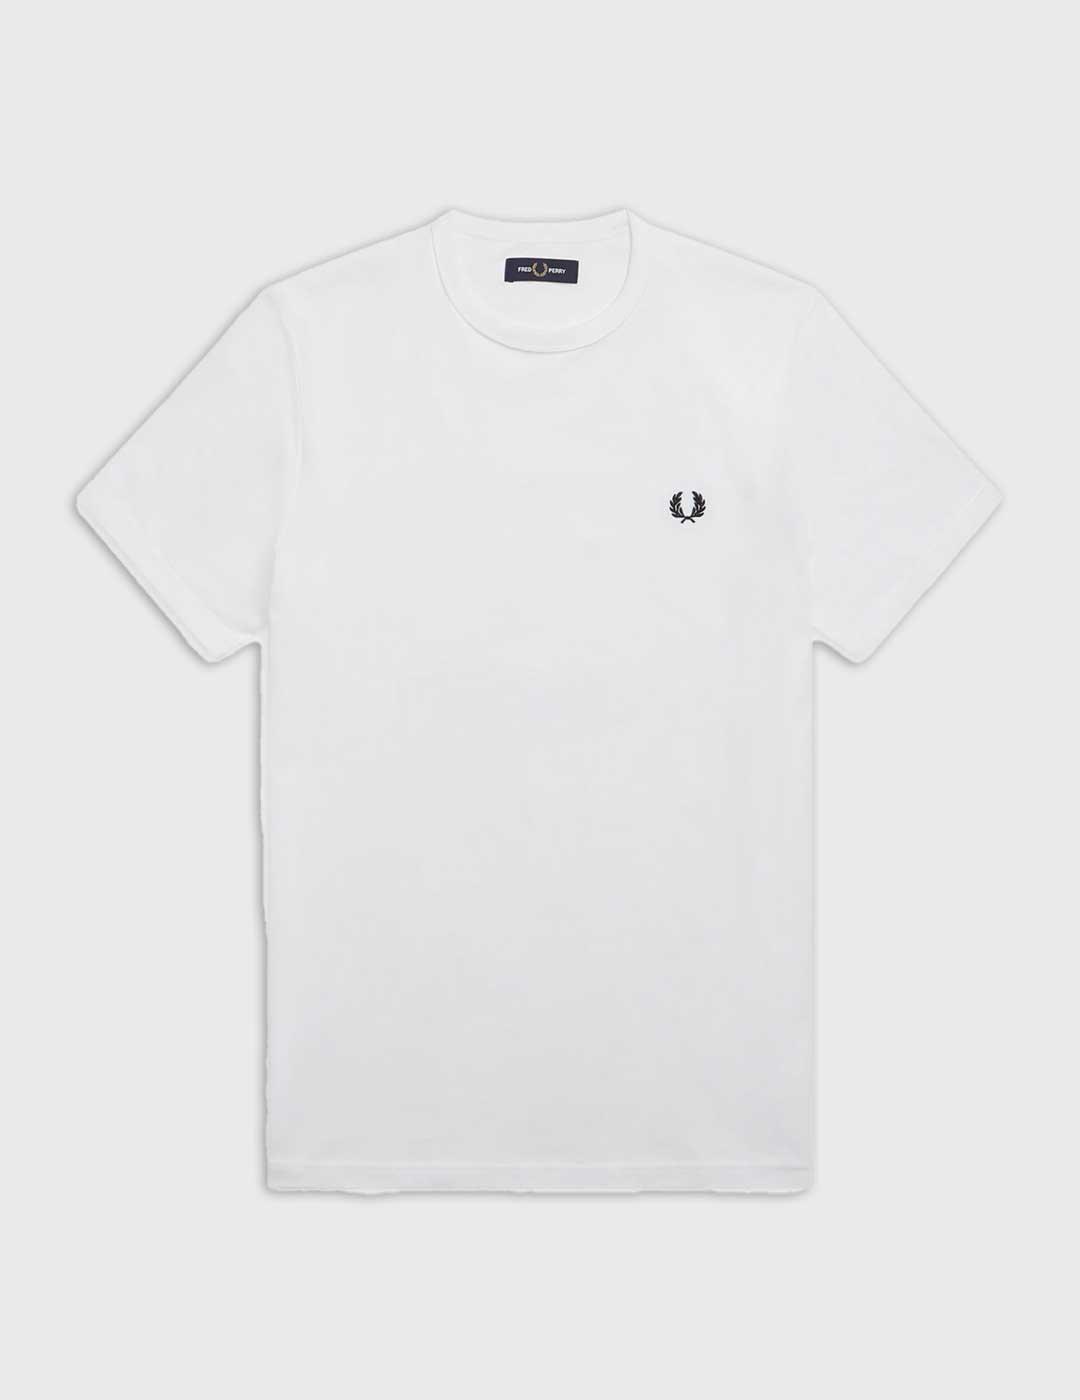 Fred Perry Ringer T Shirt Camiseta blanca para hombre